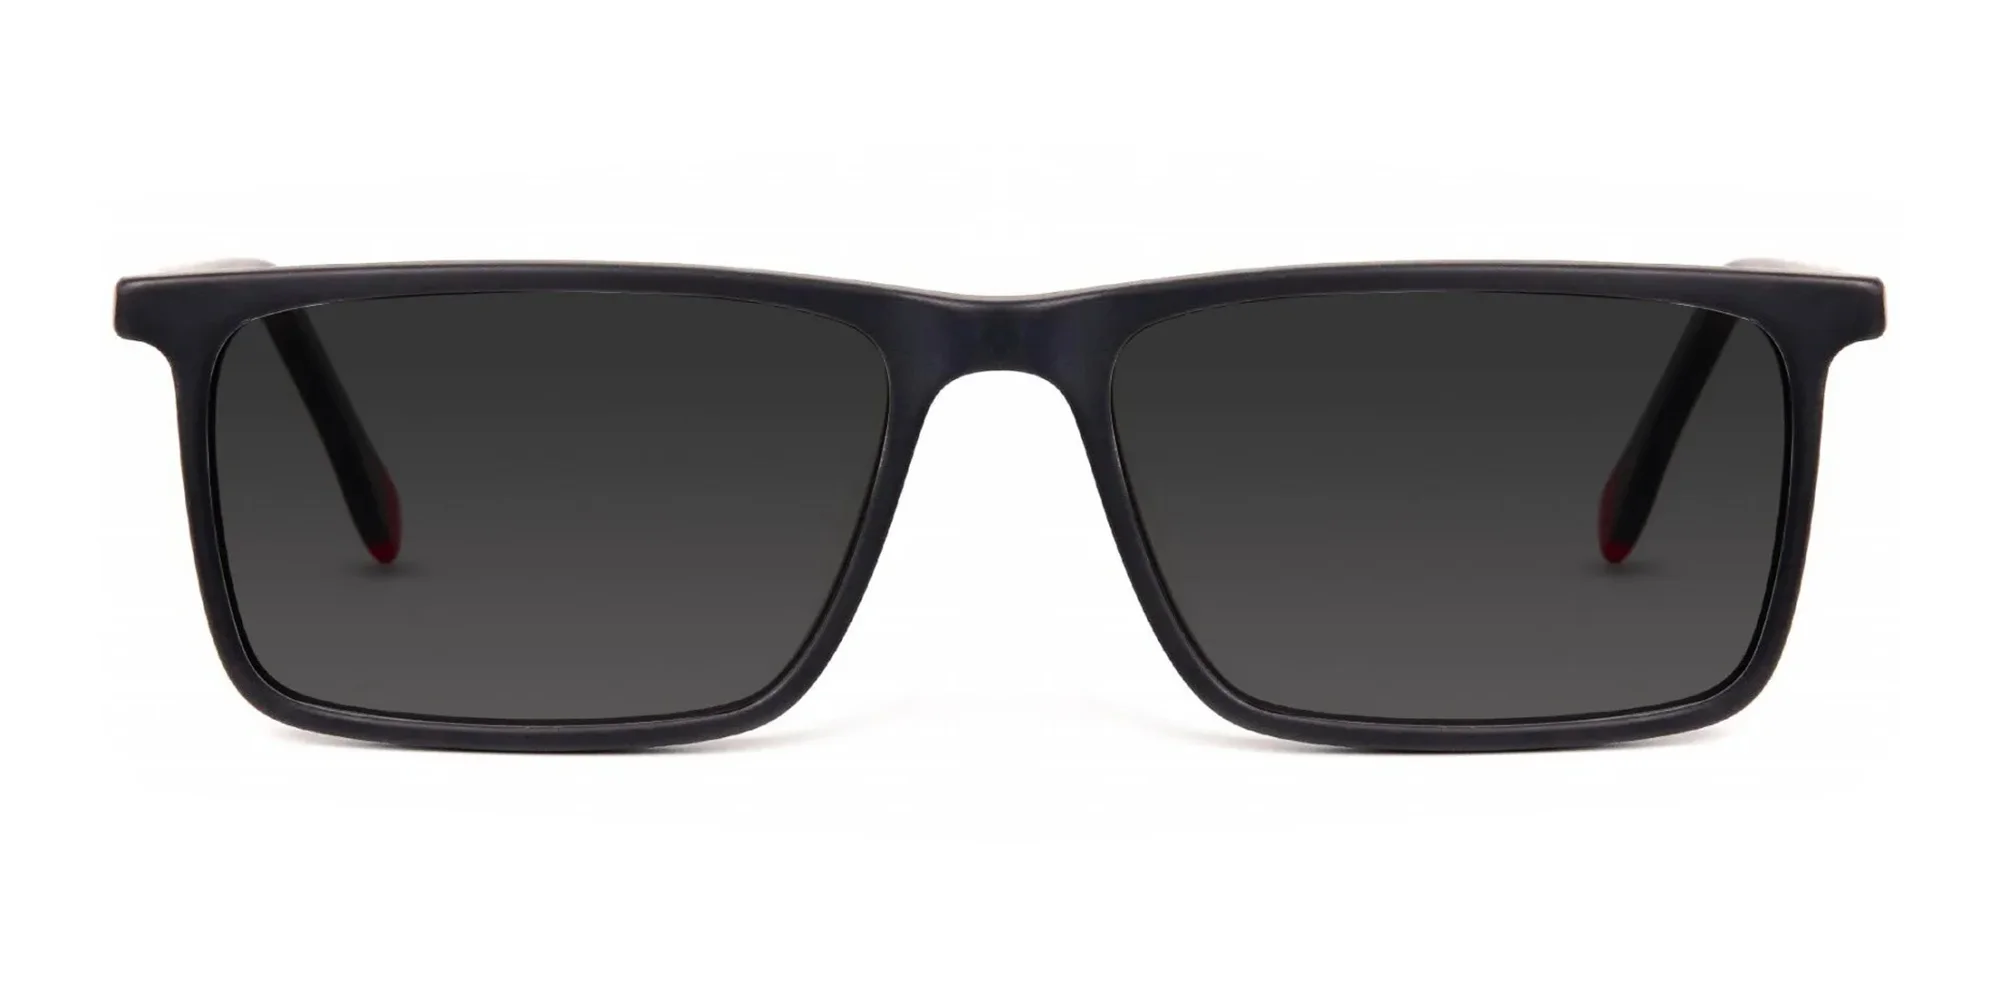 grey lens sunglasses-1